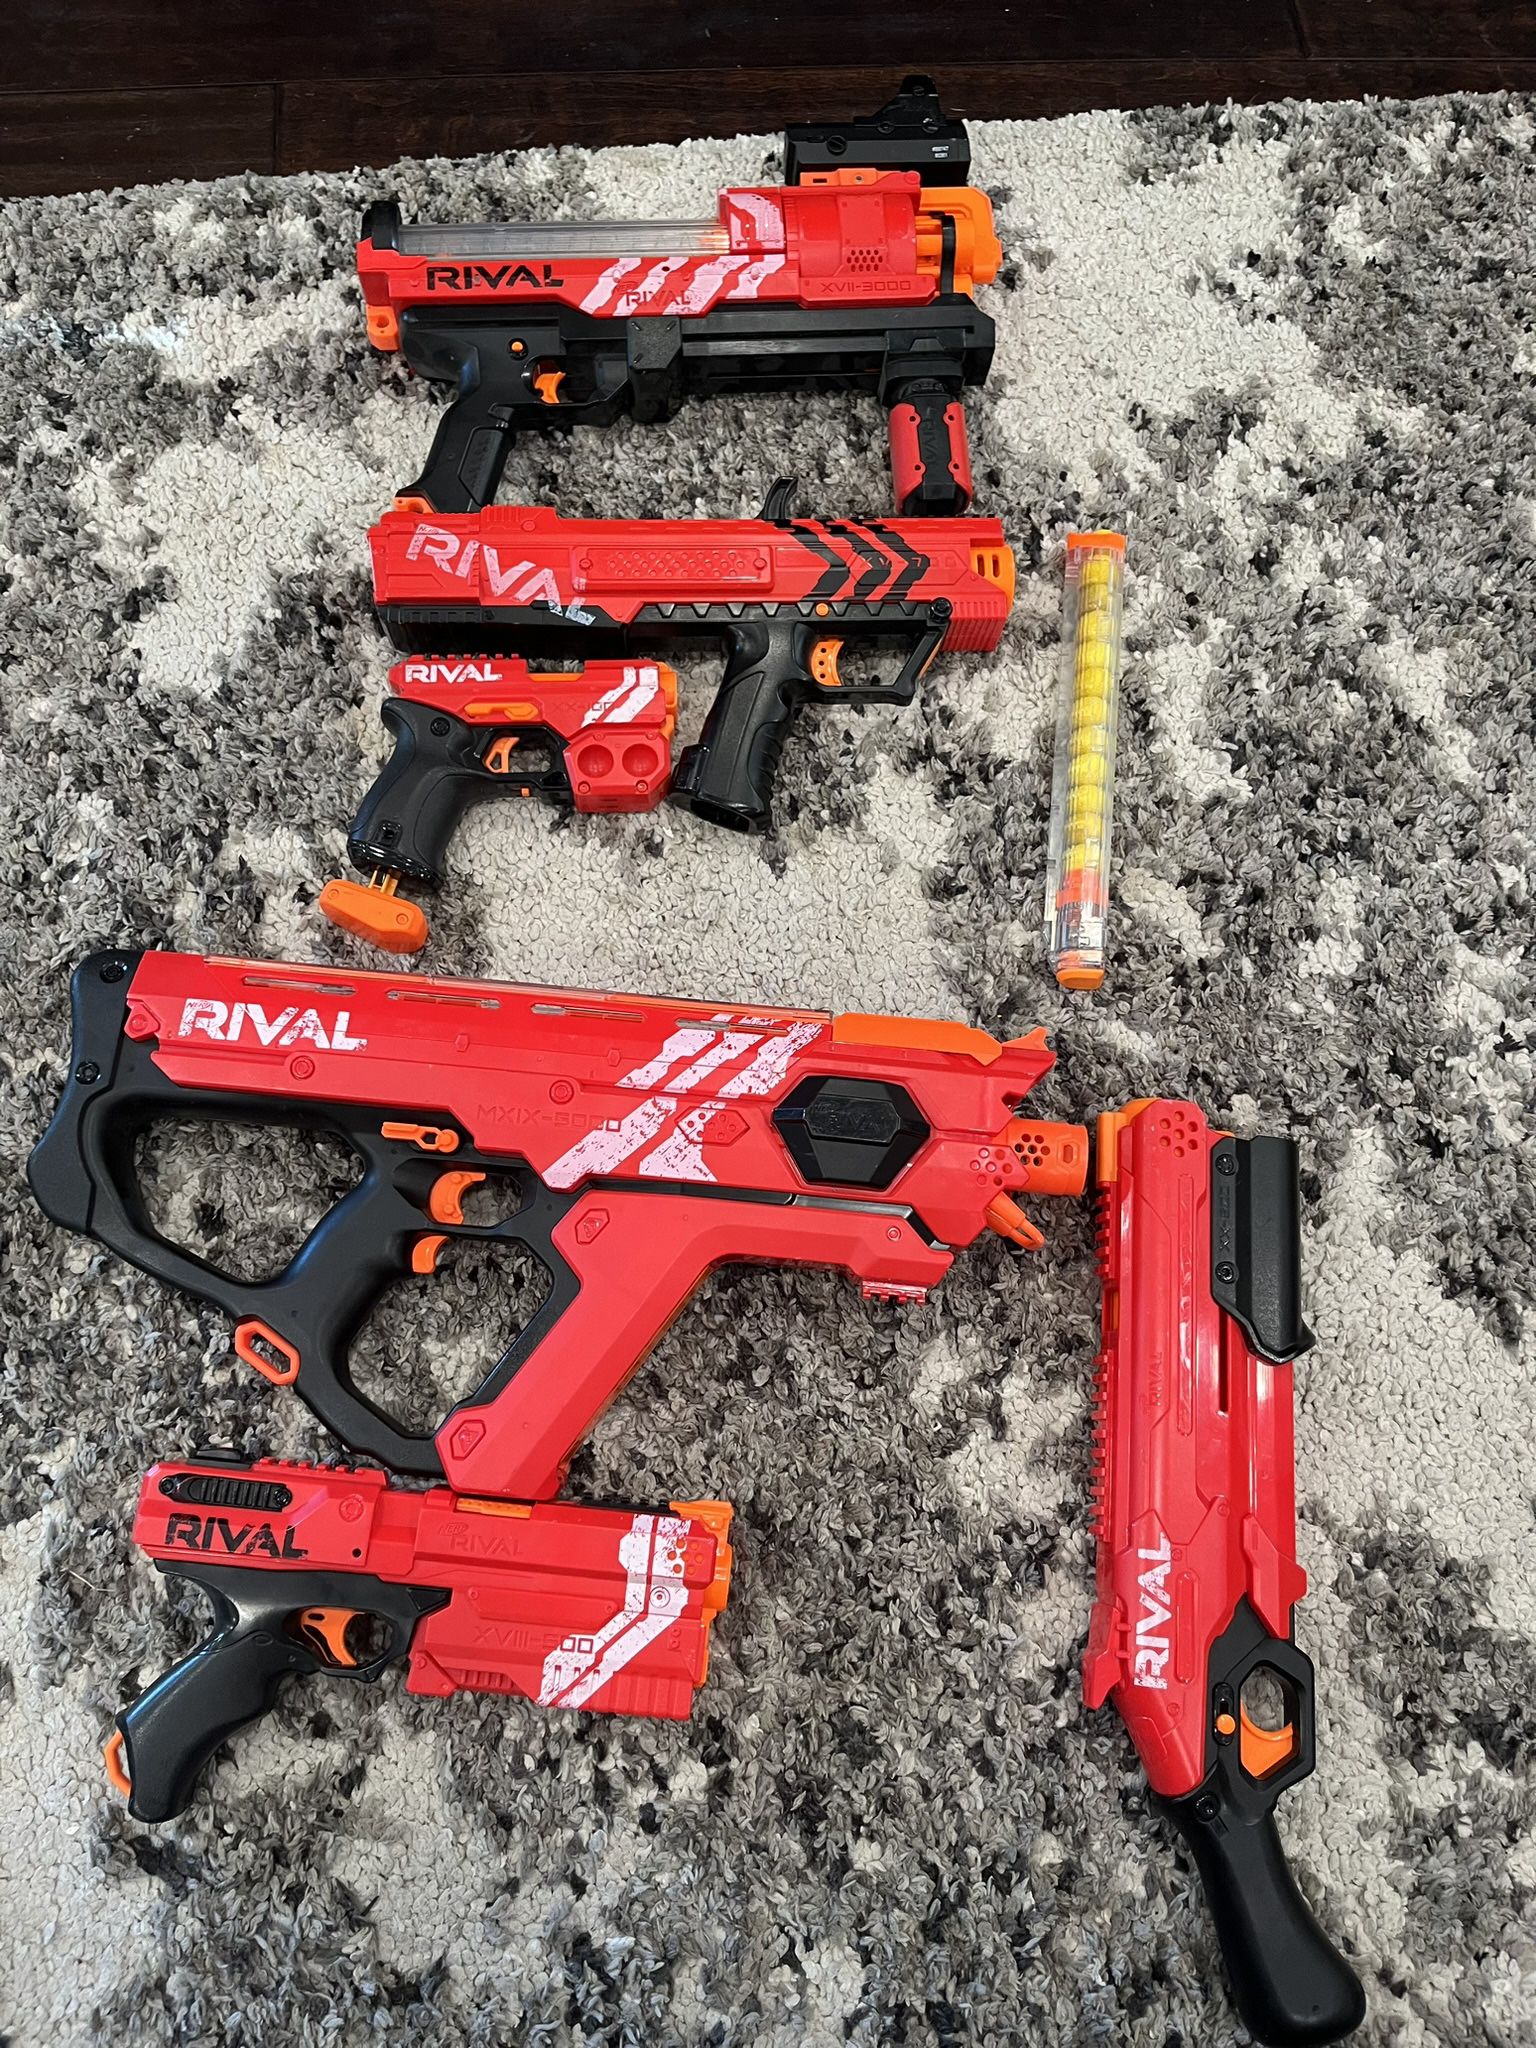 Rival Nerf Guns